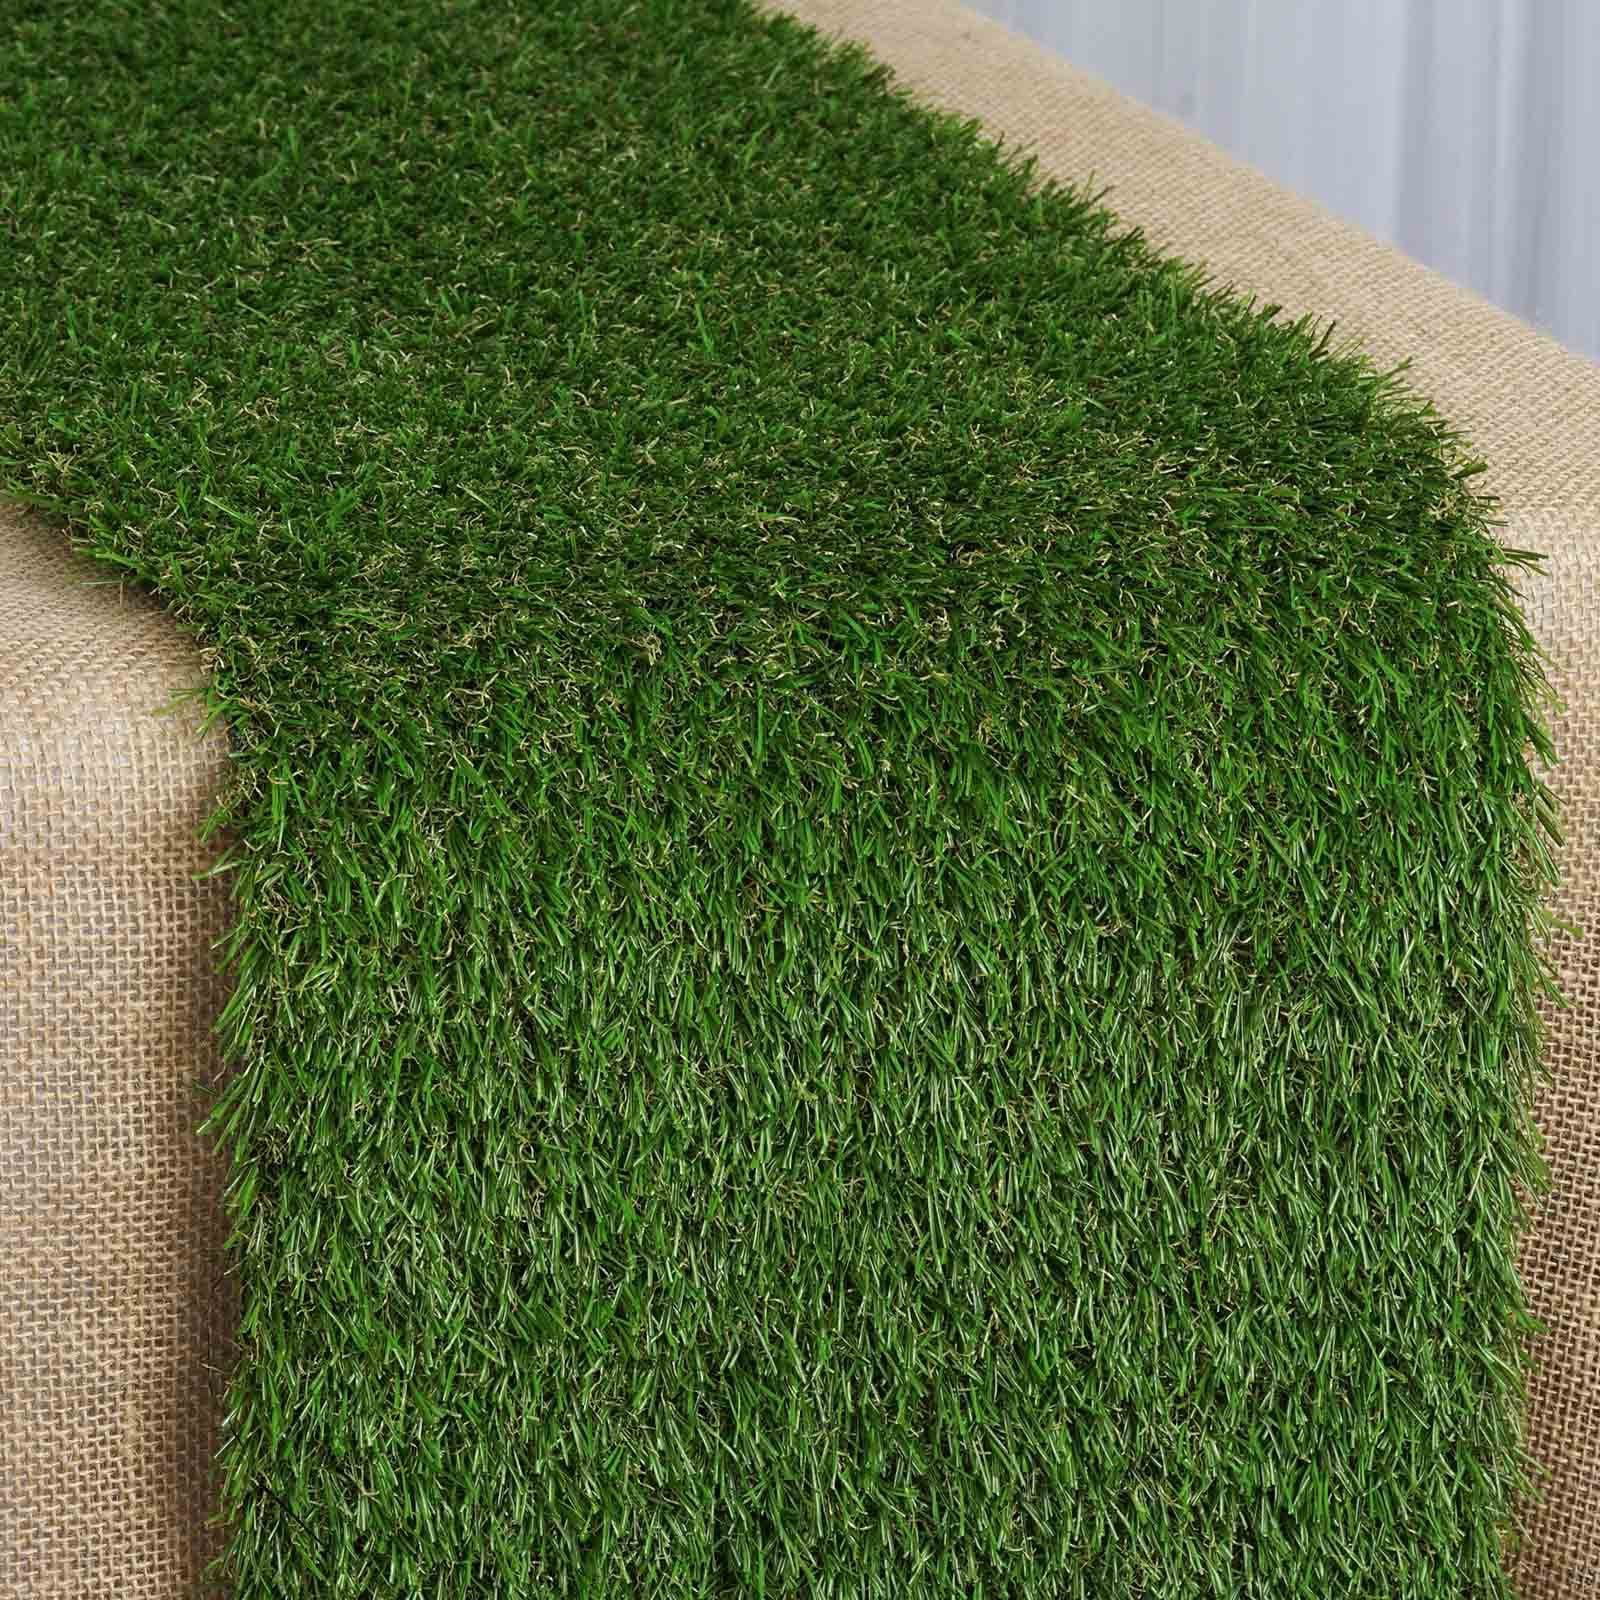 120x35cm Artificial Grass Table Runner Green Grass Table Cover